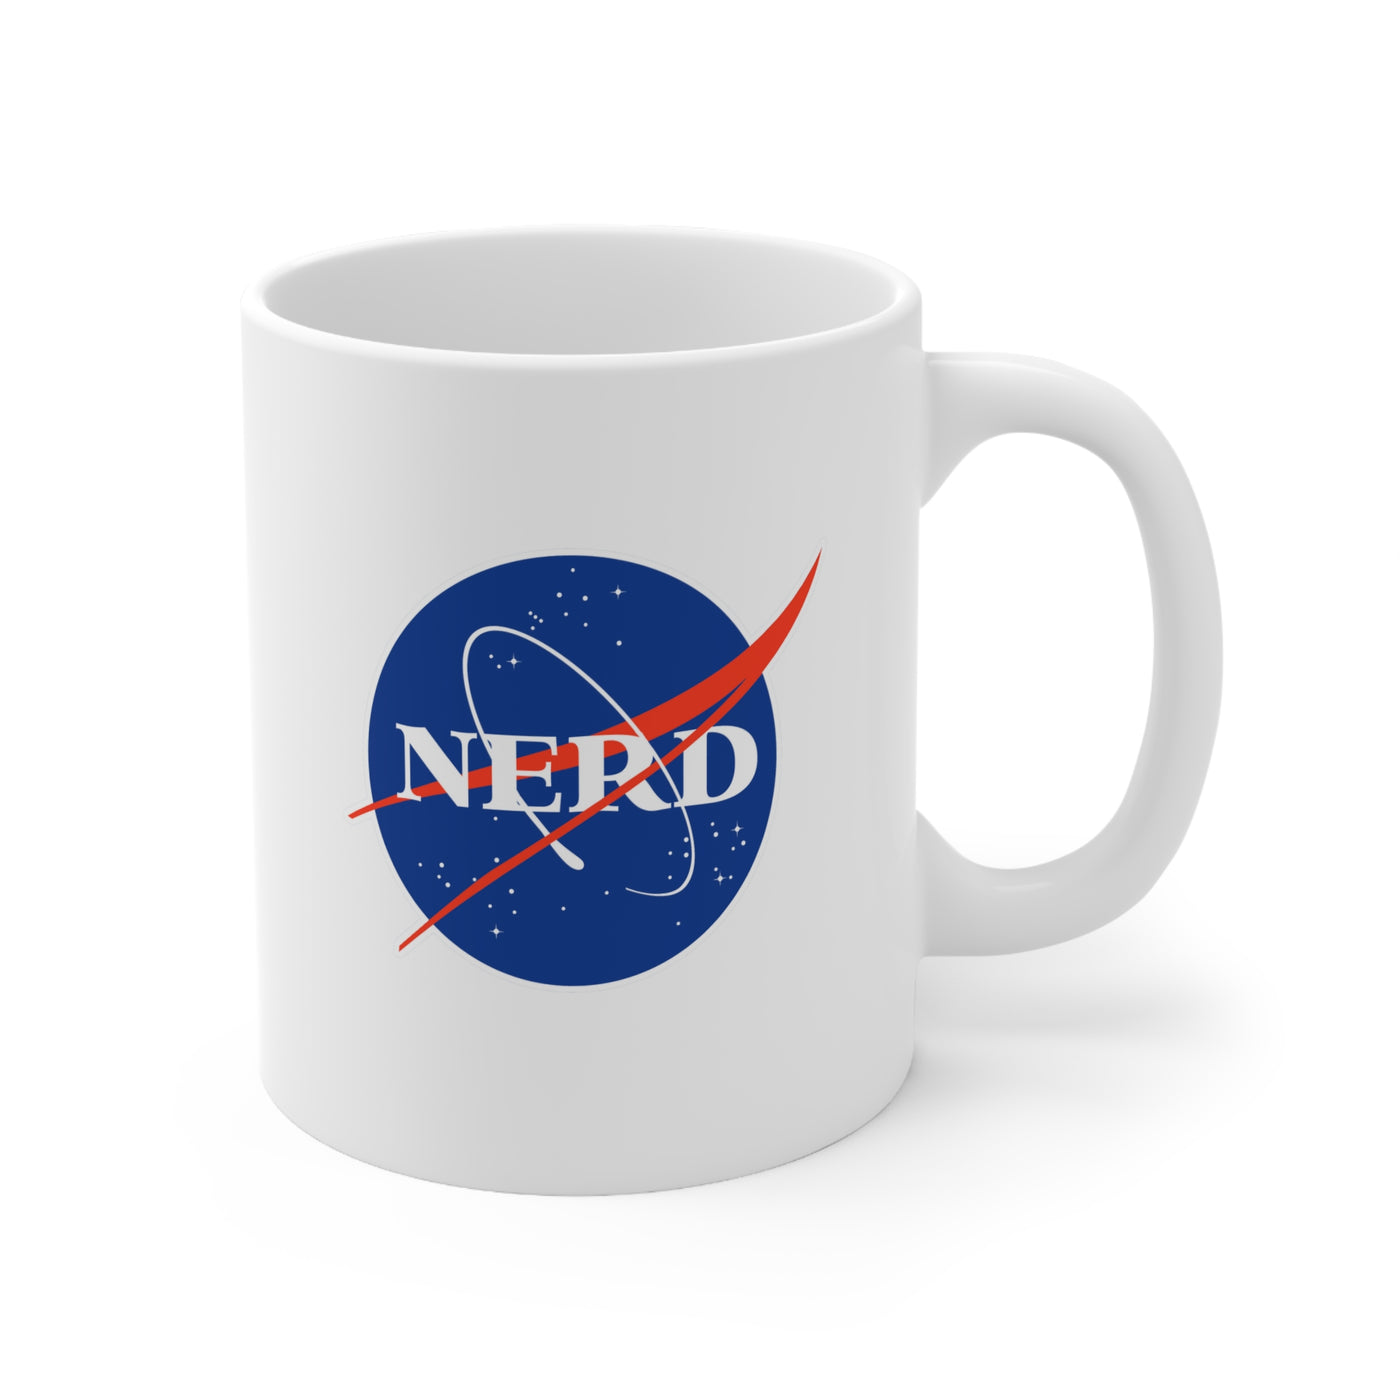 Nerd - Ceramic Mug 11oz